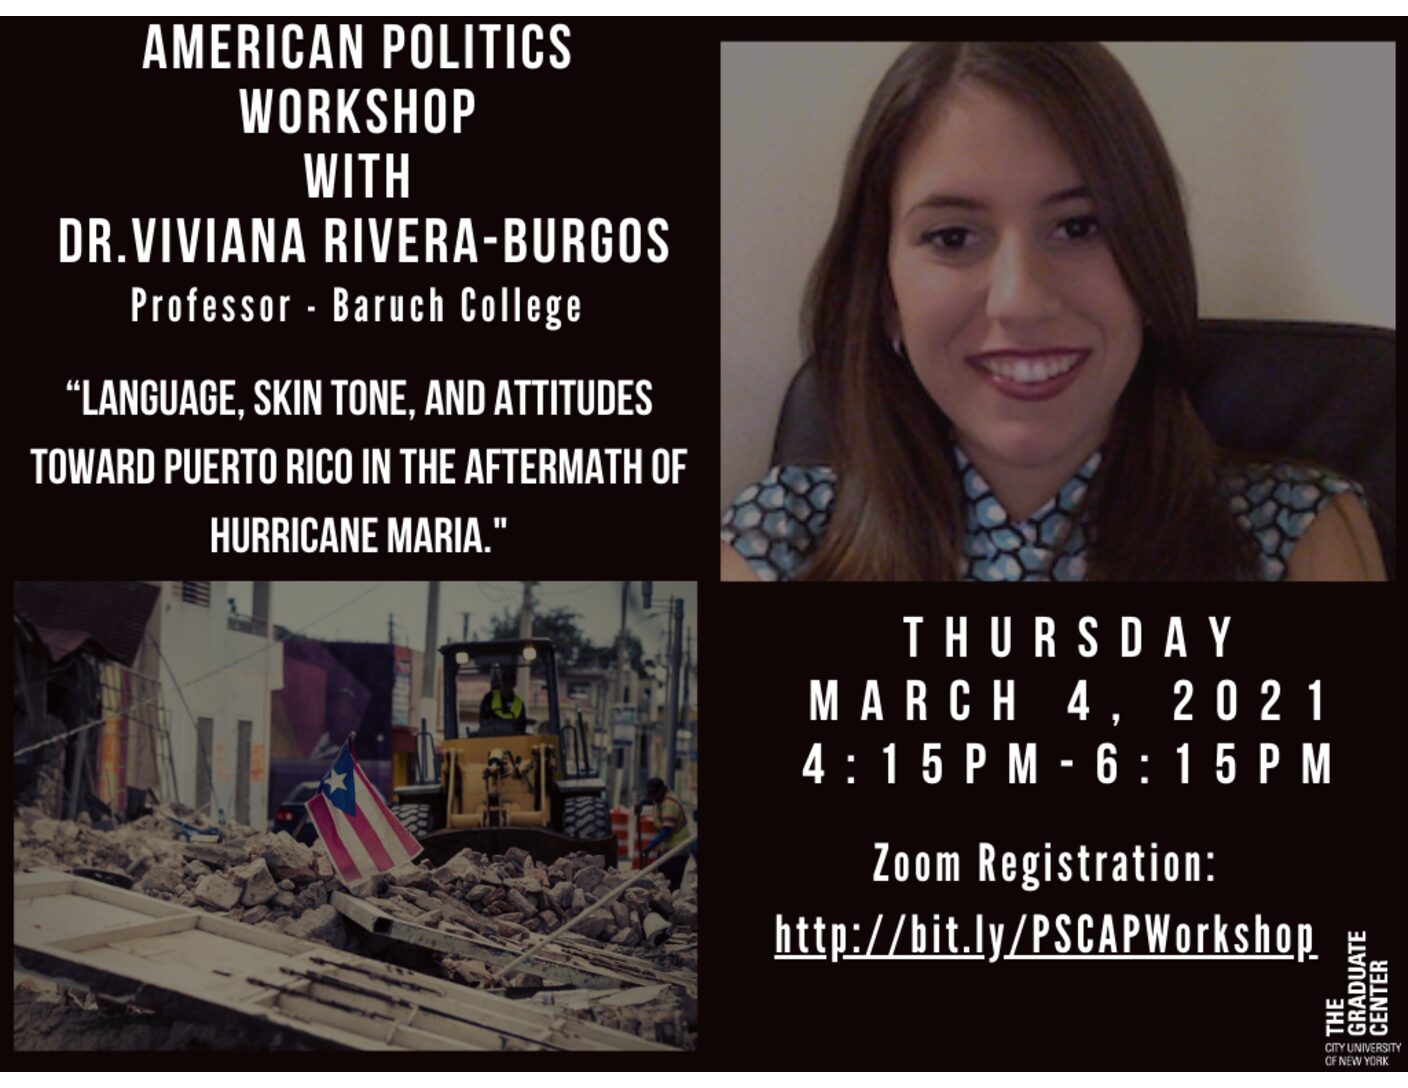 American Politics Workshop: Viviana Rivera-Burgos, "Language, Skin Tone, and Attitudes toward Puerto Rico in the Aftermath of Hurricane Maria," Thursday, March 4, 4:15-6:15PM